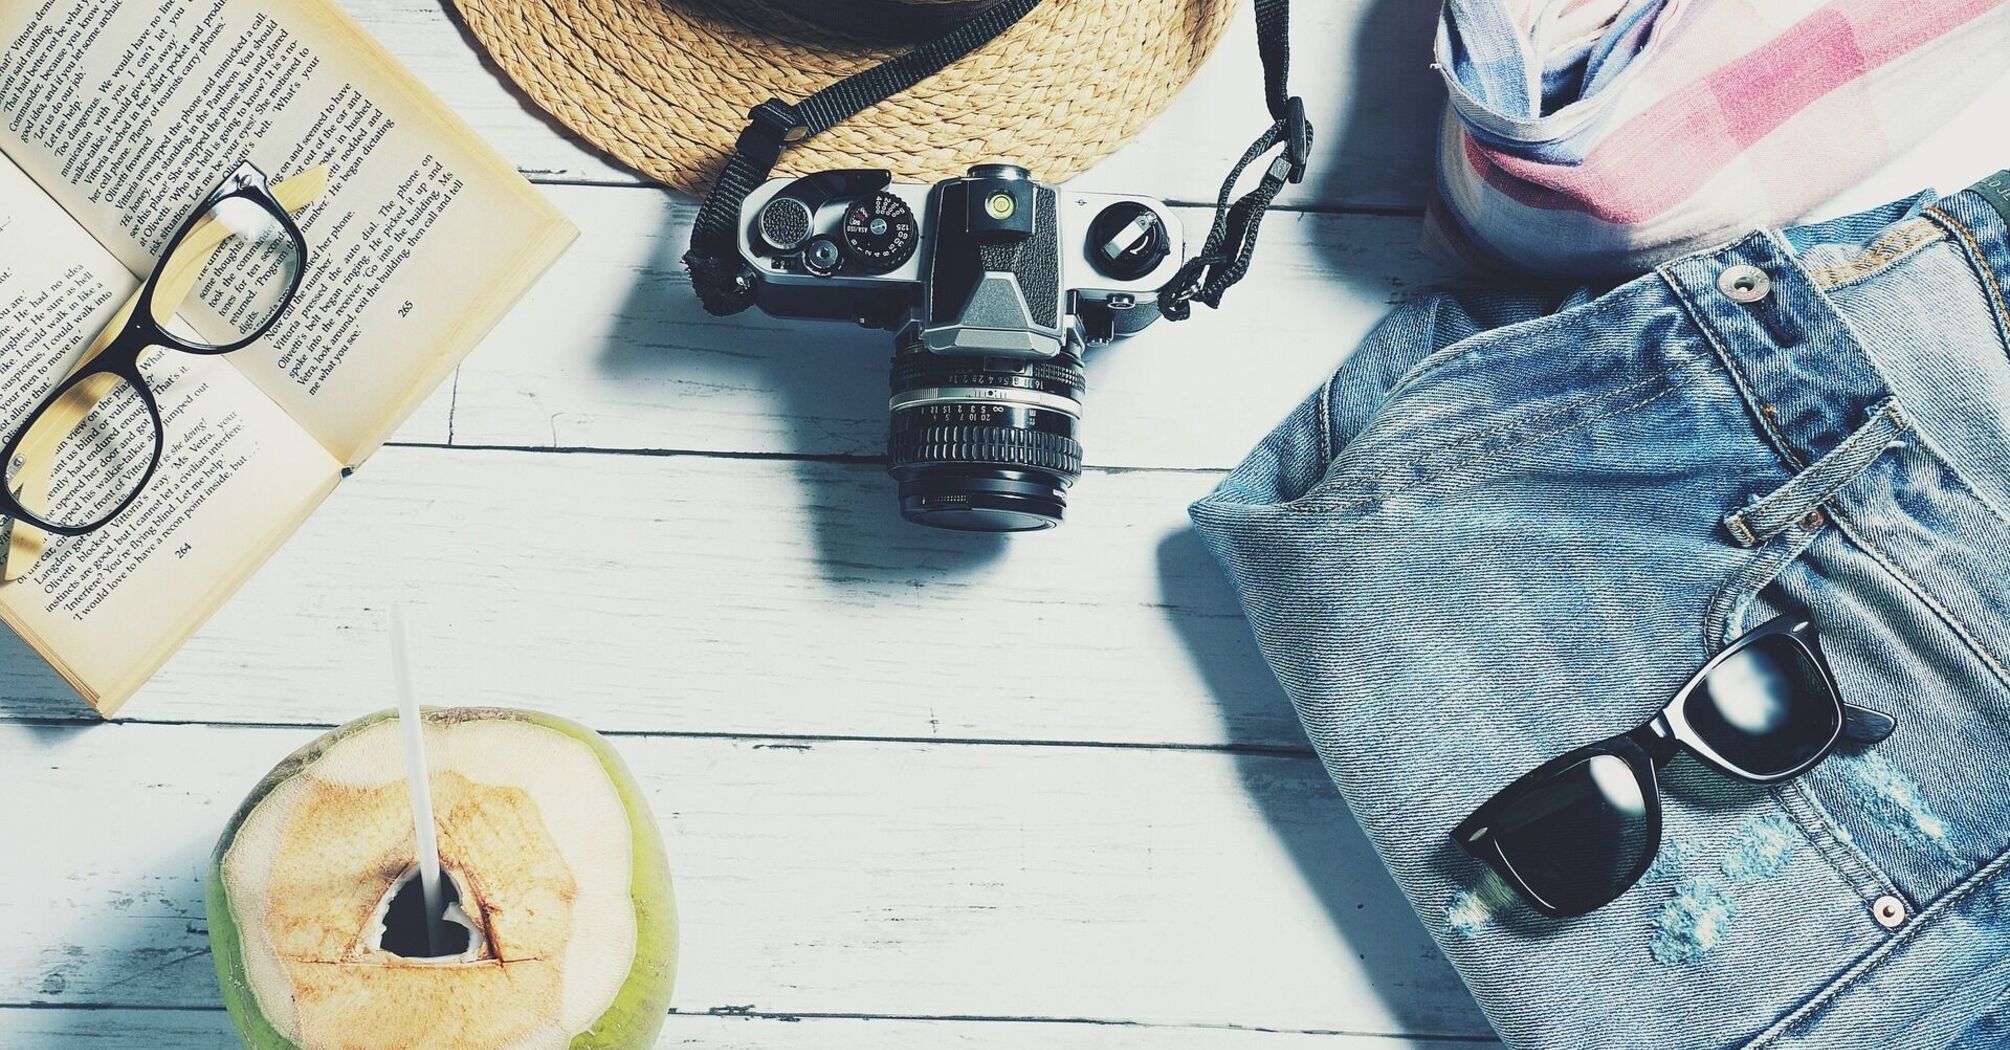 Travel essentials including a camera, book, sunglasses, and hat